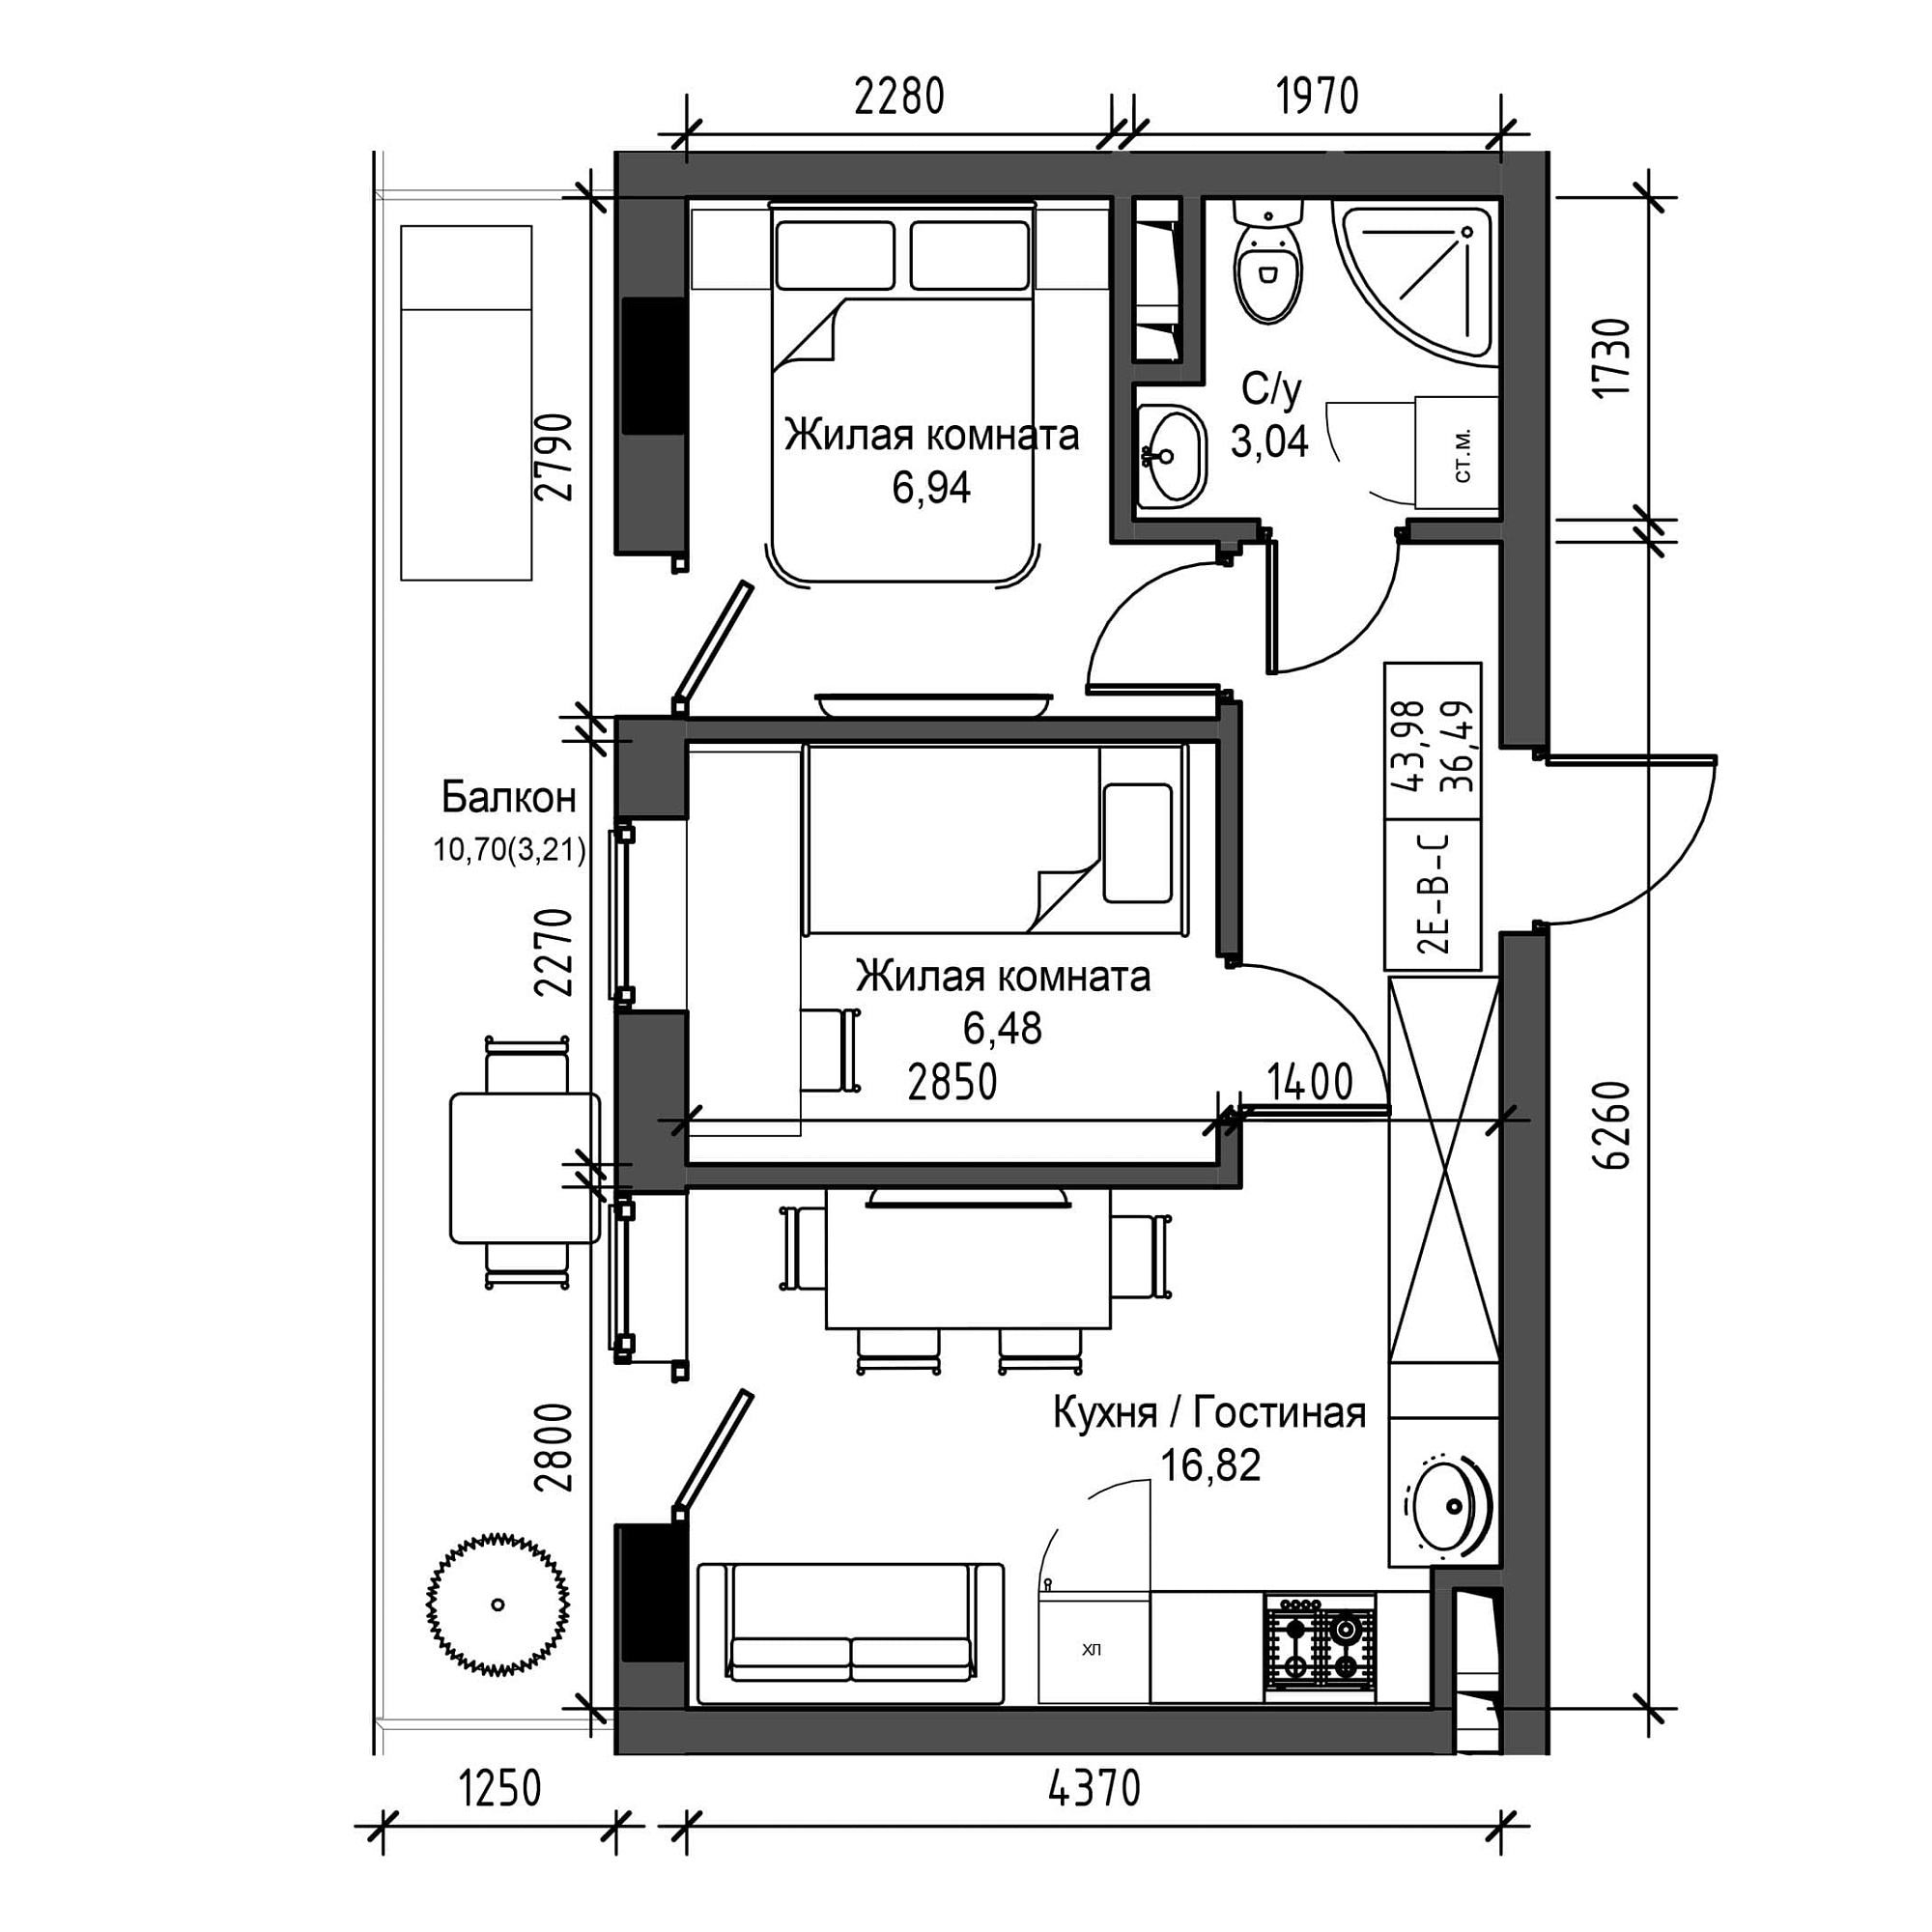 Планування 2-к квартира площею 36.49м2, UM-001-06/0017.